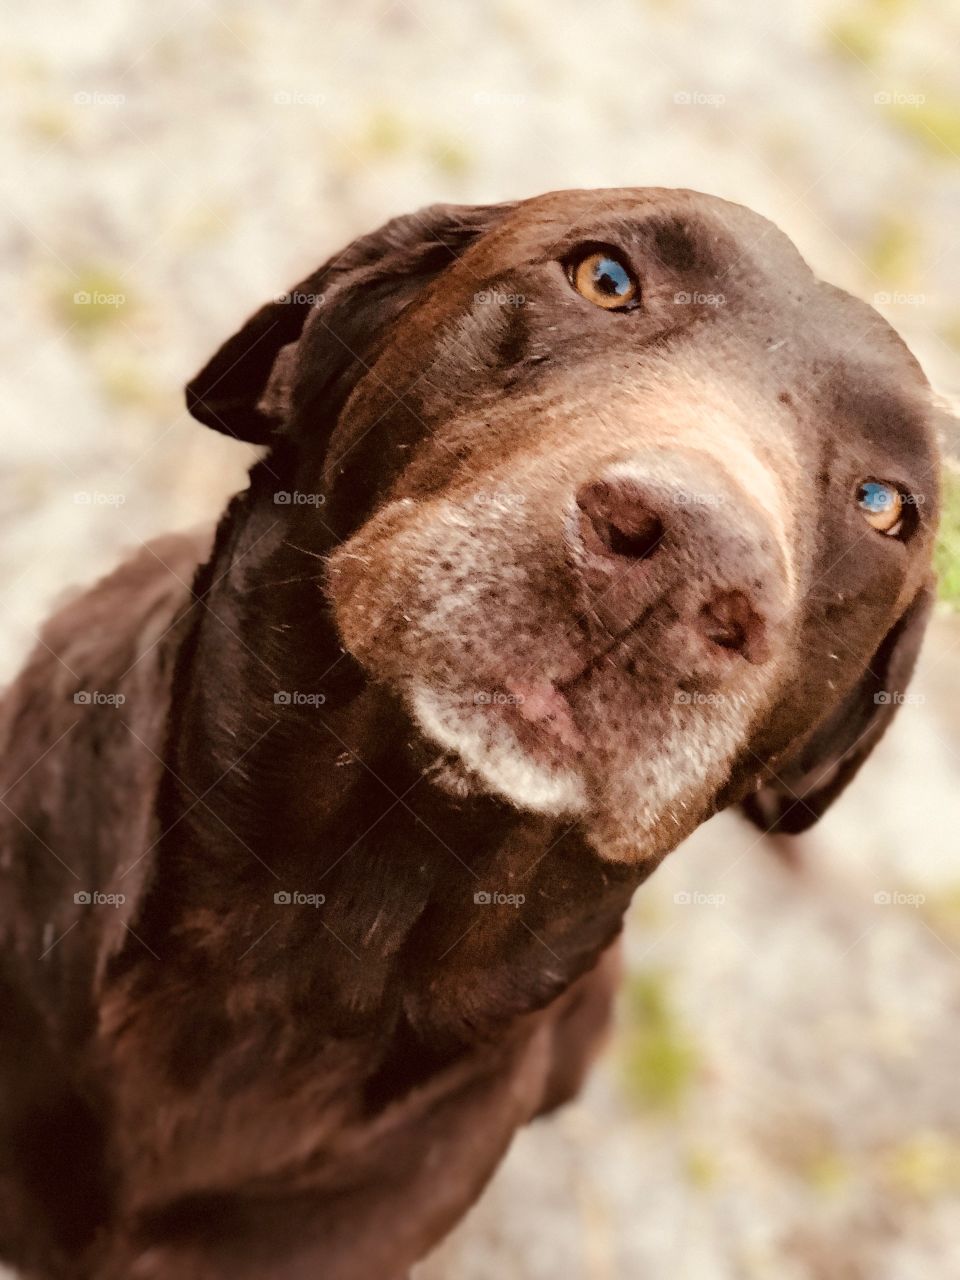 Our sweet old Chocolate Labrador aka Choco.